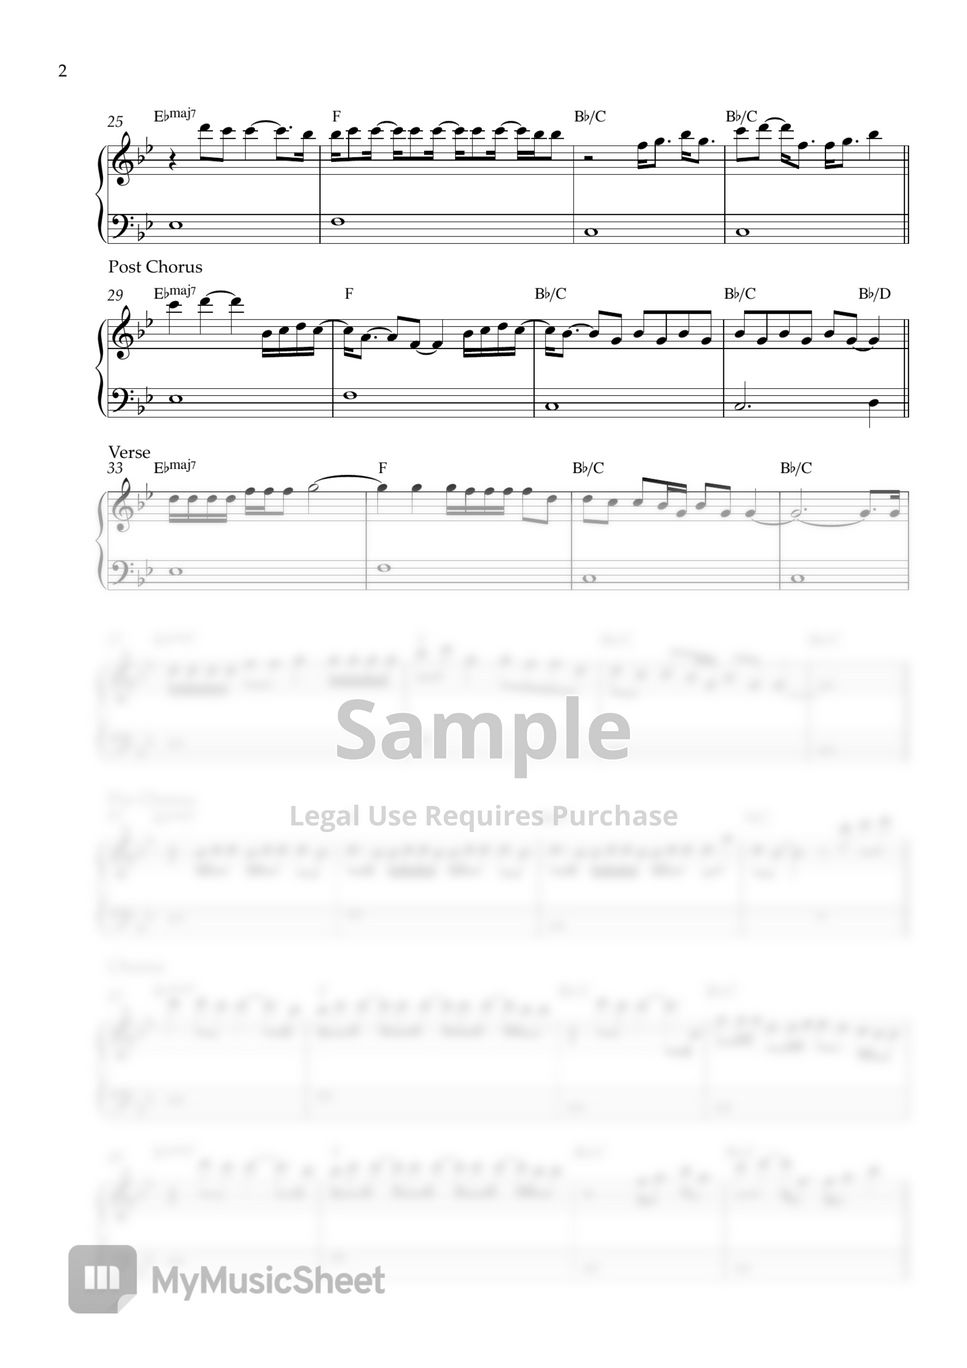 Taylor Swift - Lavender Haze (EASY PIANO SHEET) by Pianella Piano